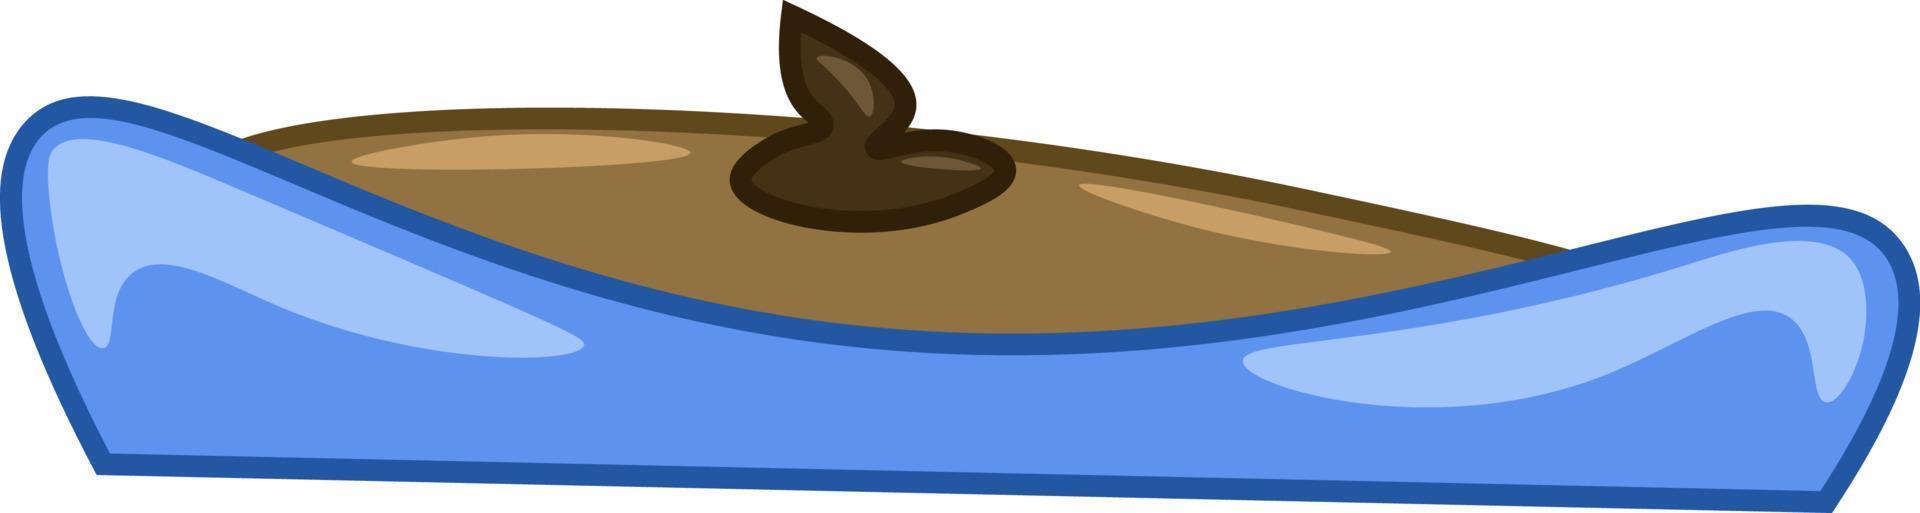 A blue sandbox, vector or color illustration.